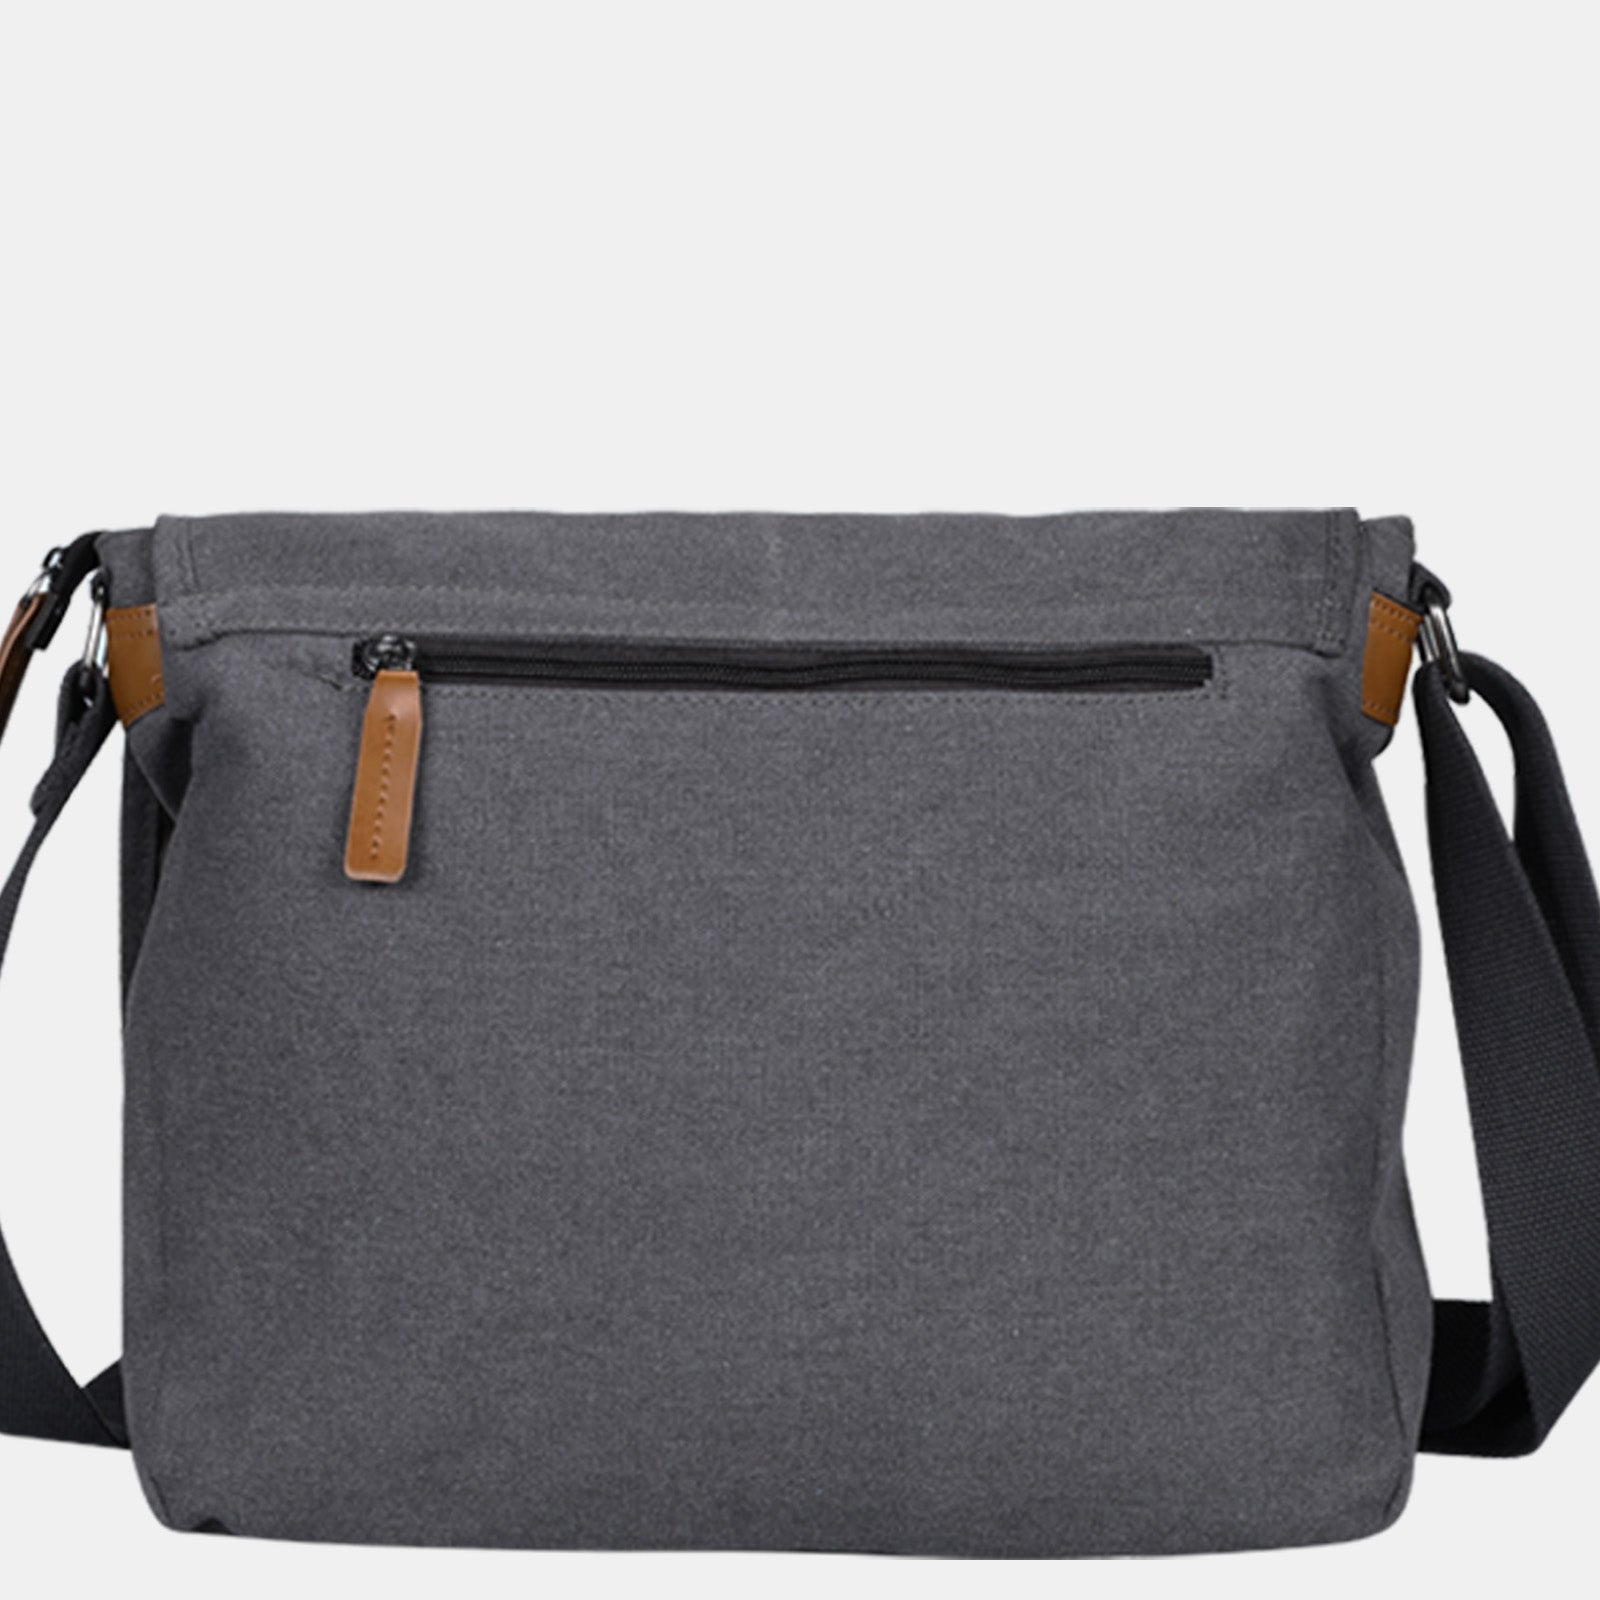 Estarer Laptop Messenger Bag Bookbag Canvas Satchel